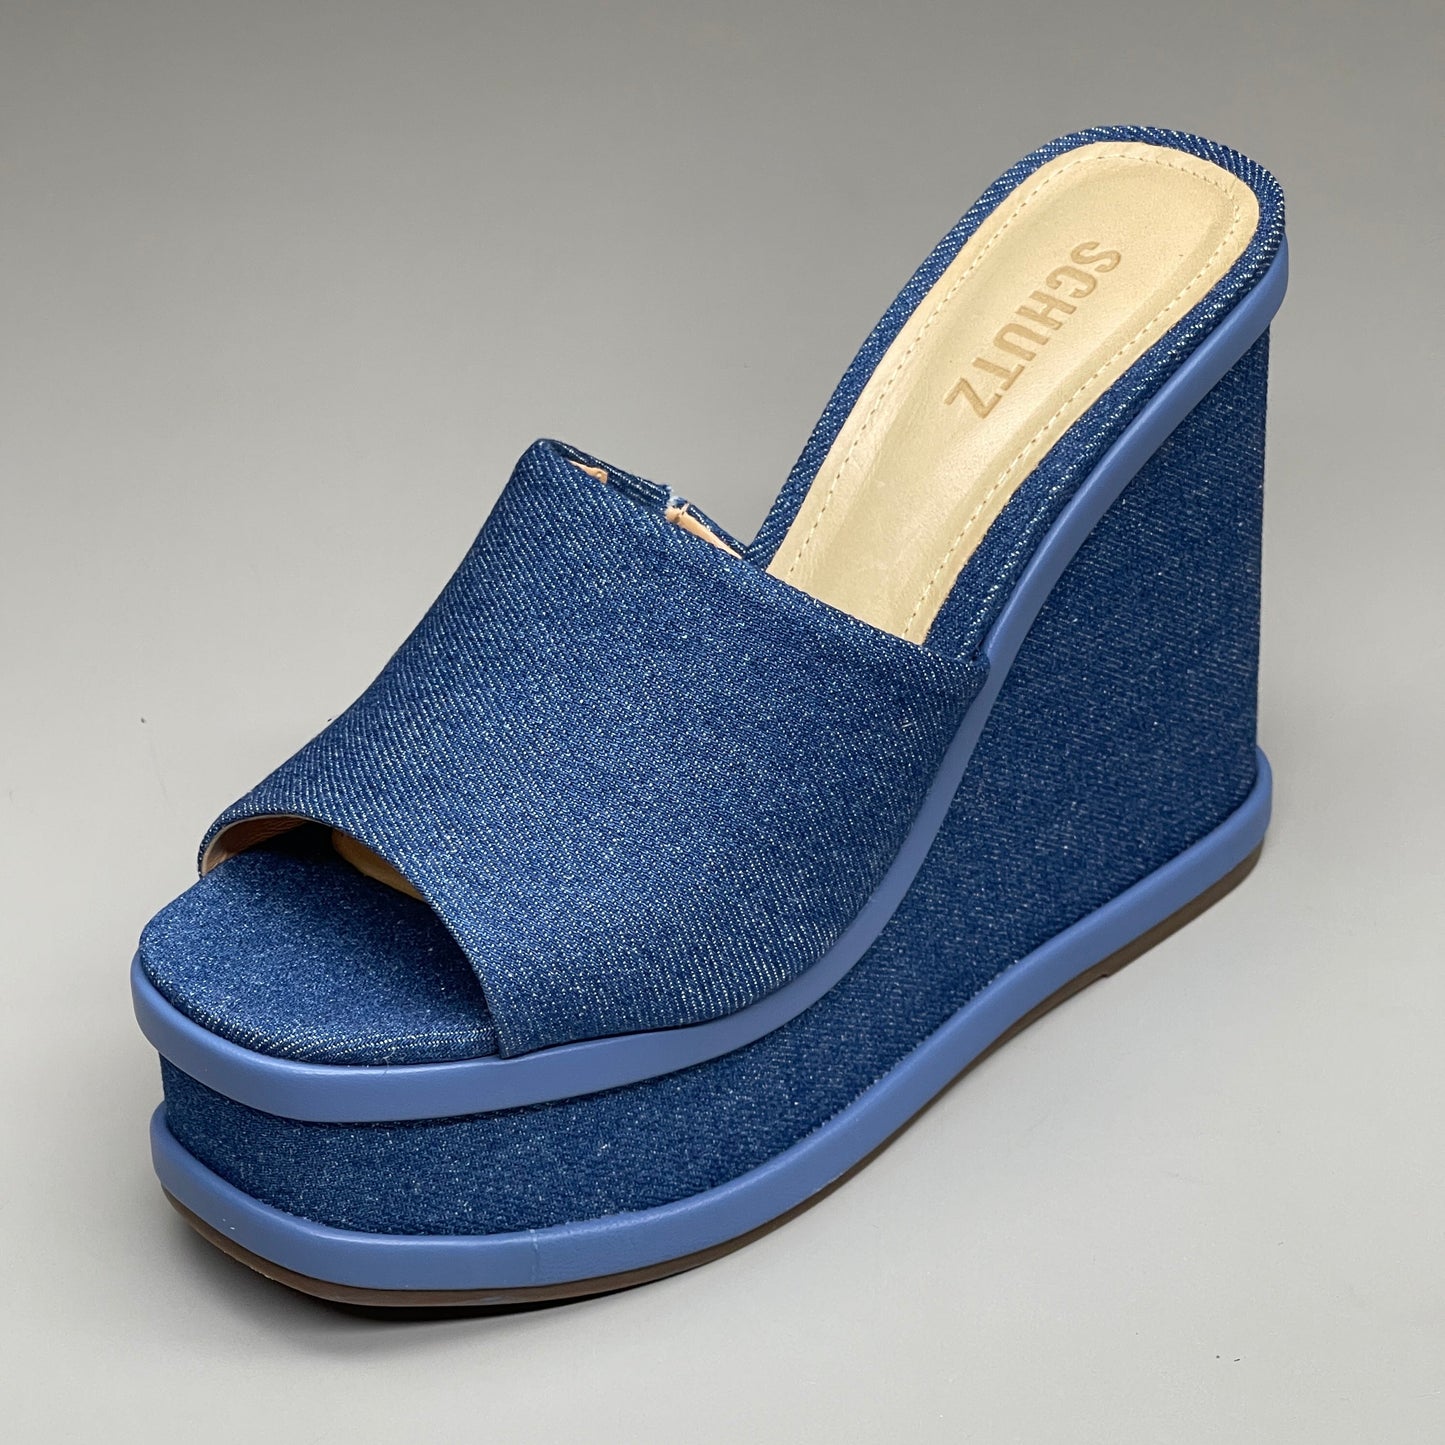 SCHUTZ Dalle Denim Women's Wedge Sandal Blue Platform Shoe Sz 6B (New)